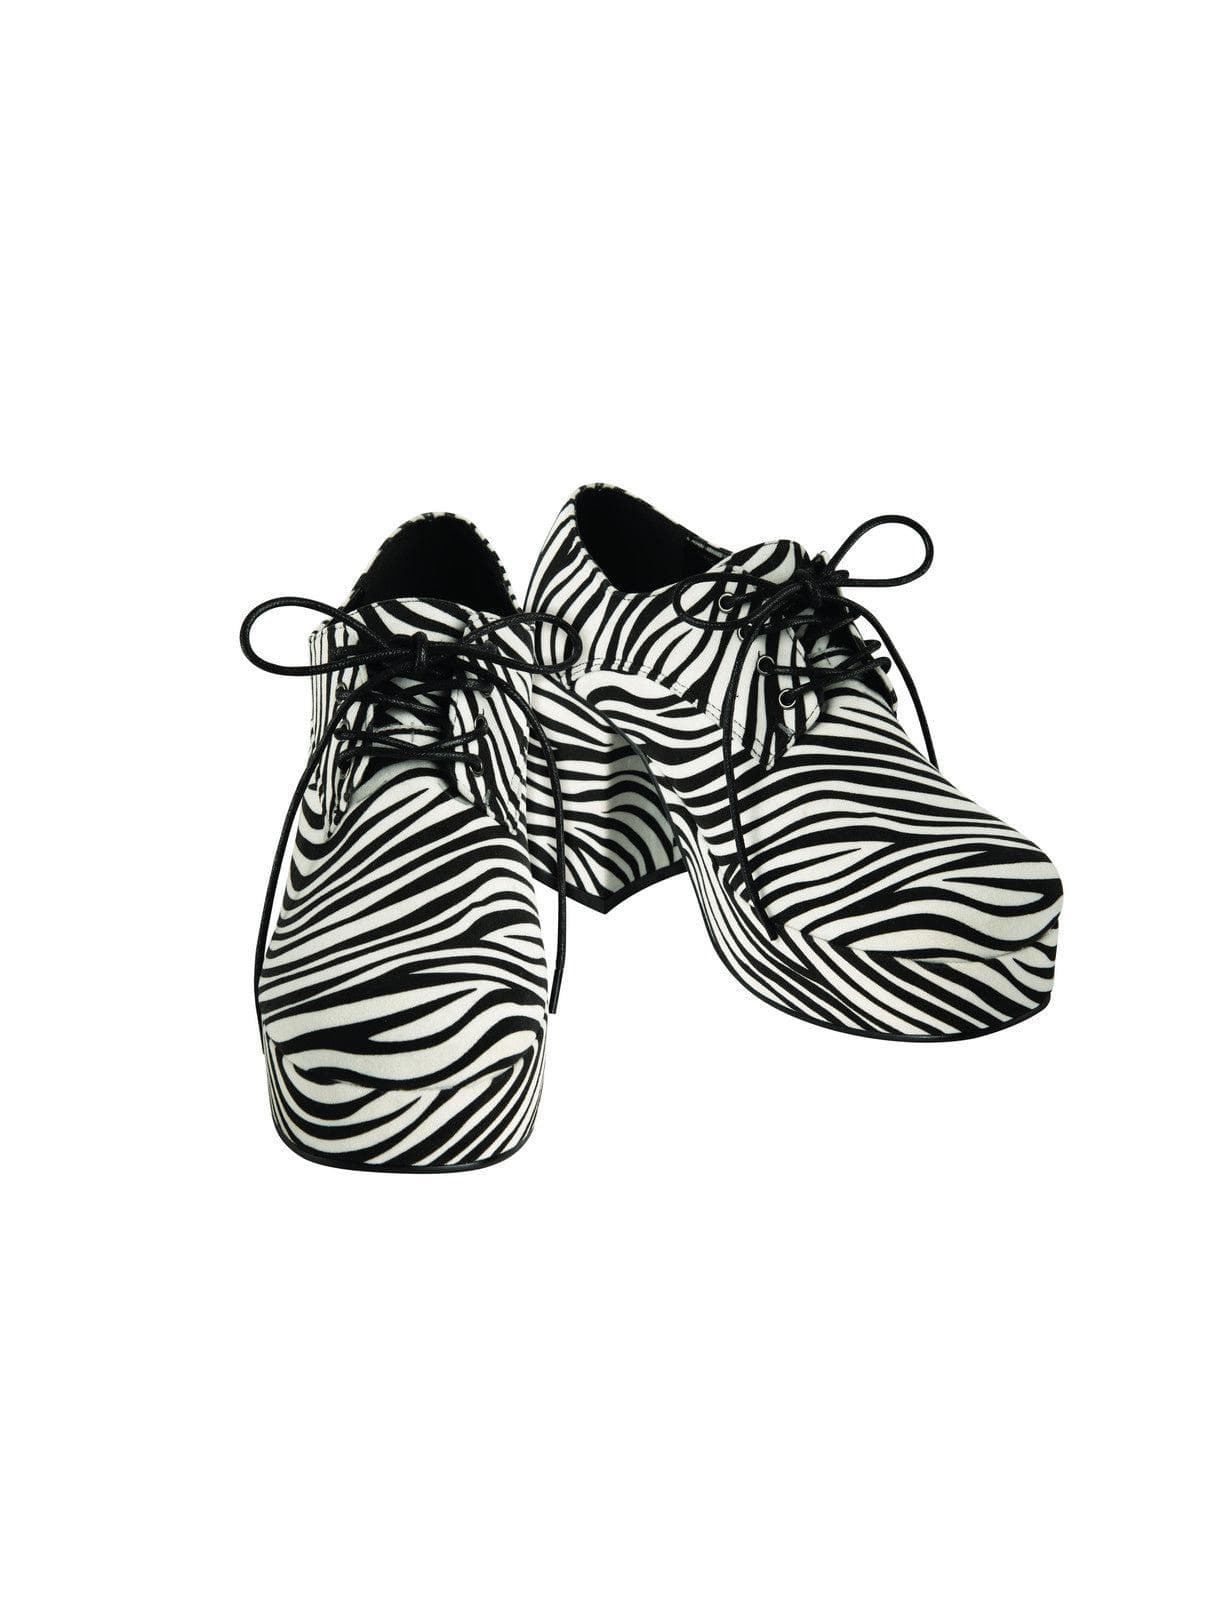 Adult Zebra 70's Platform Heeled Shoes - costumes.com